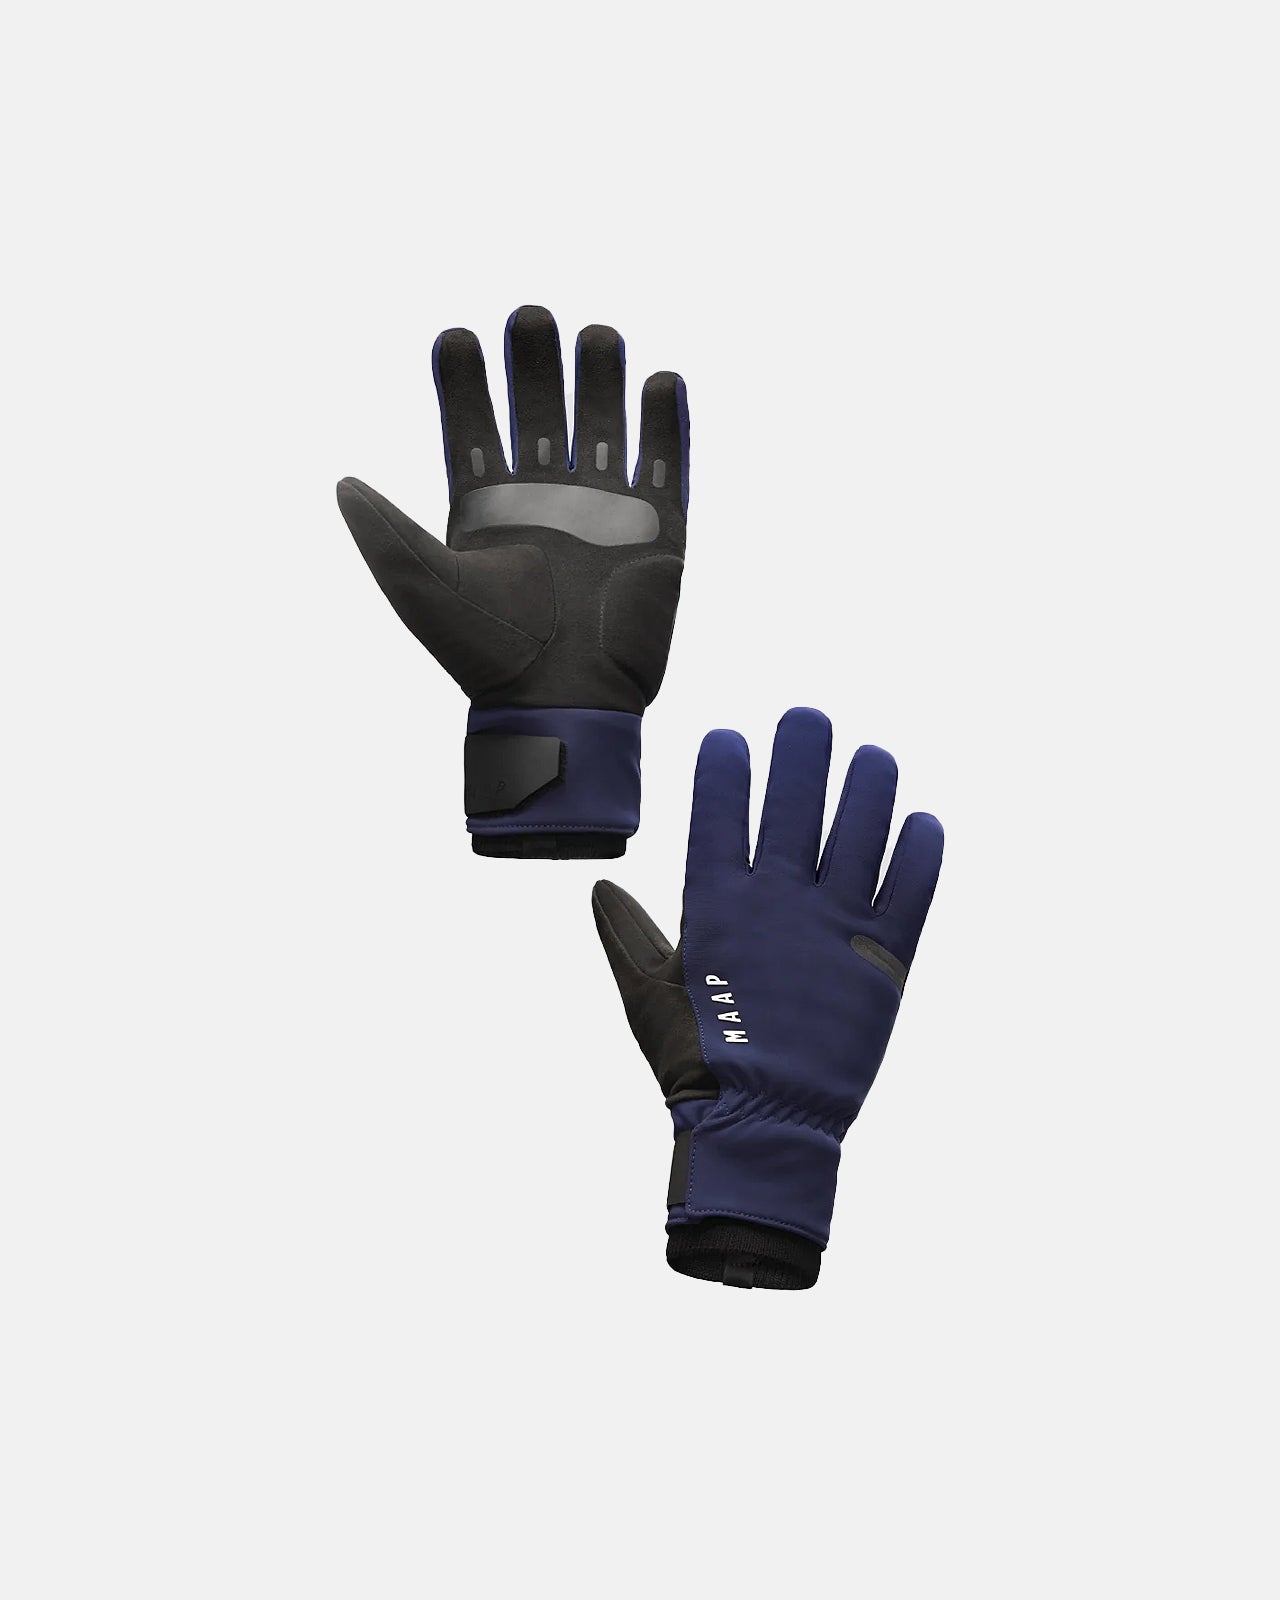 Apex Deep Winter Glove - Navy